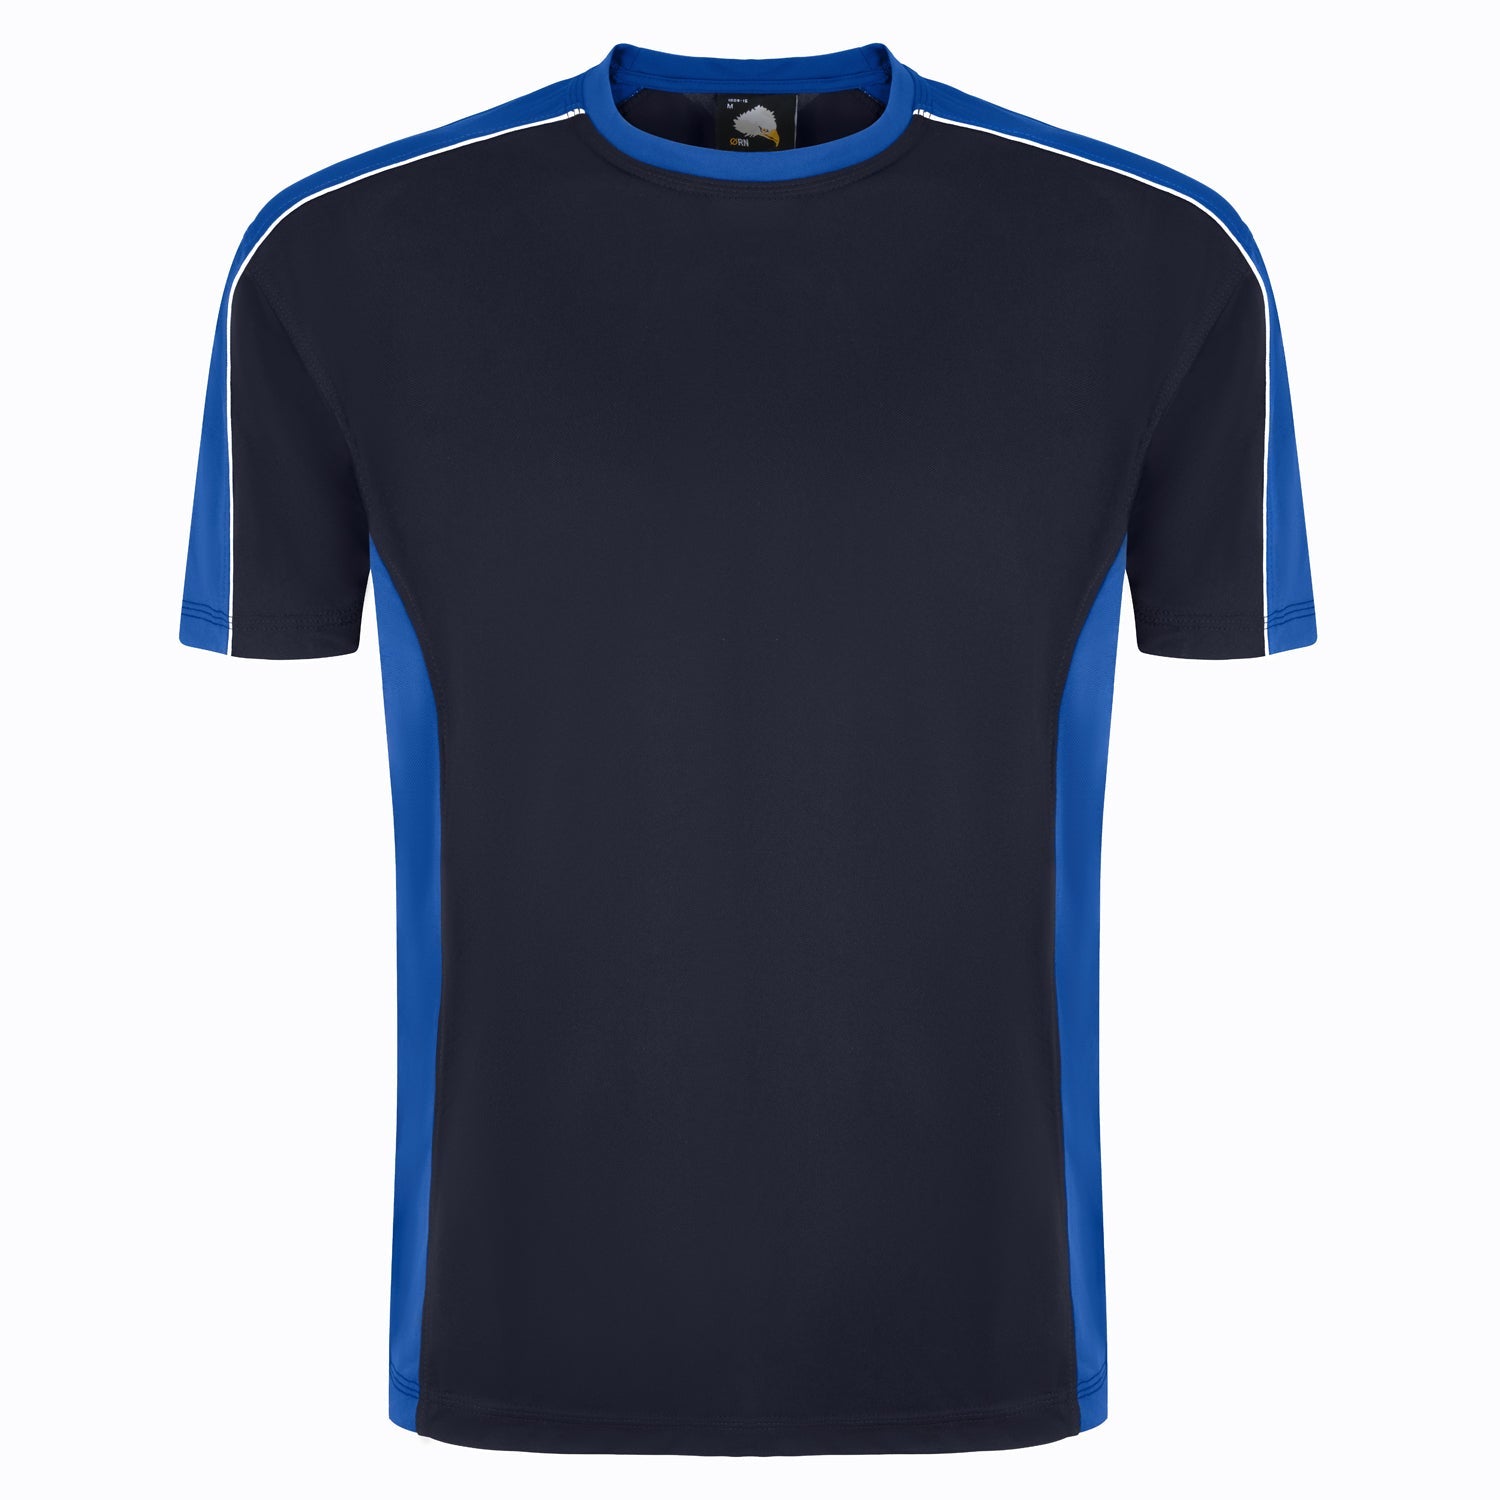 ORN Avocet Wicking T-Shirt - Navy/Royal Blue